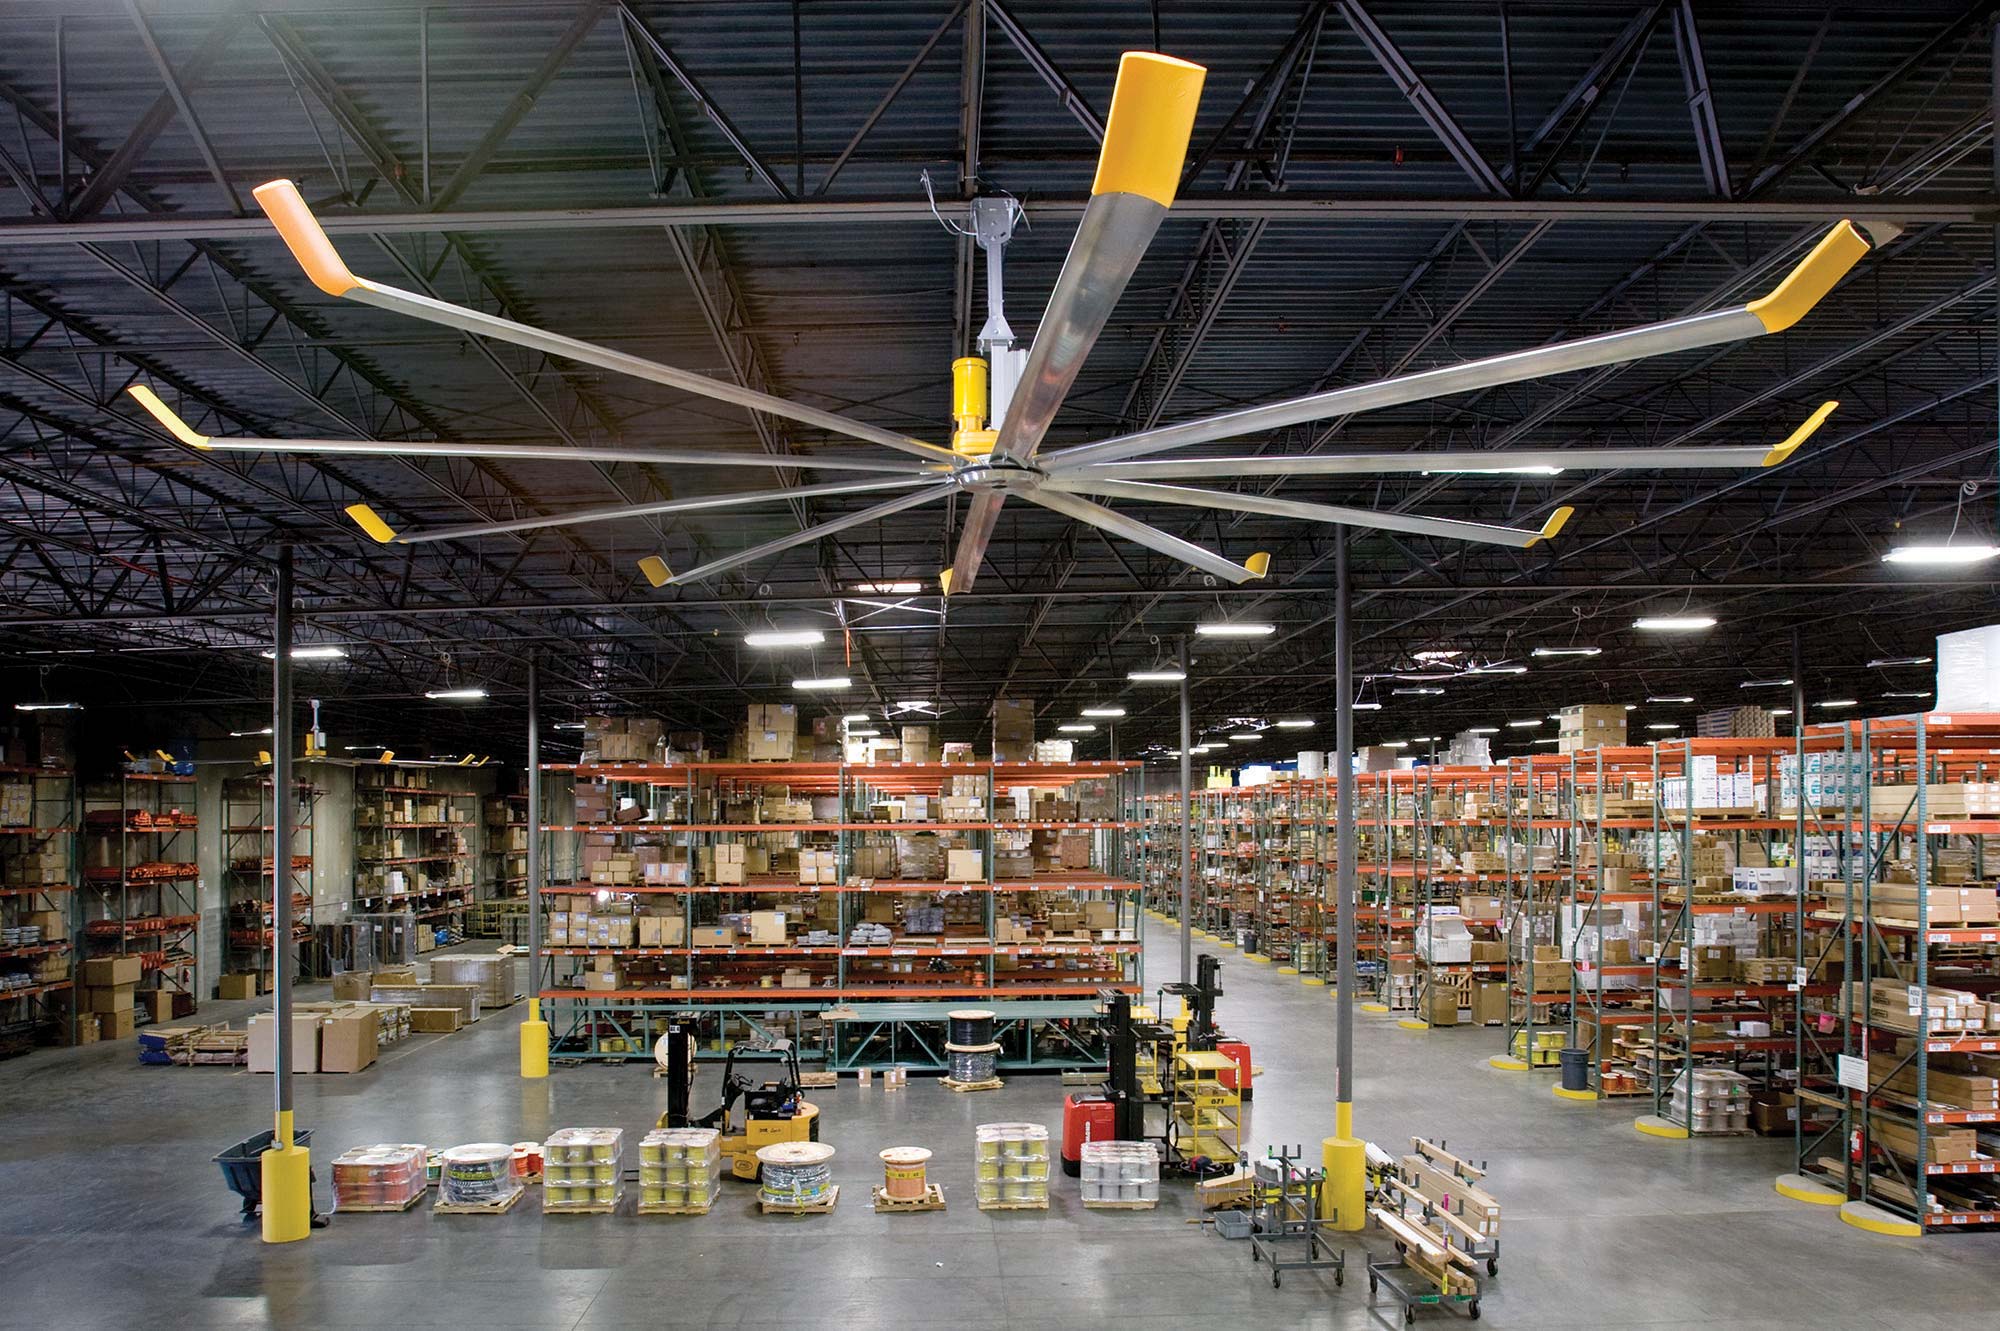 large ceiling fan in a warehouse